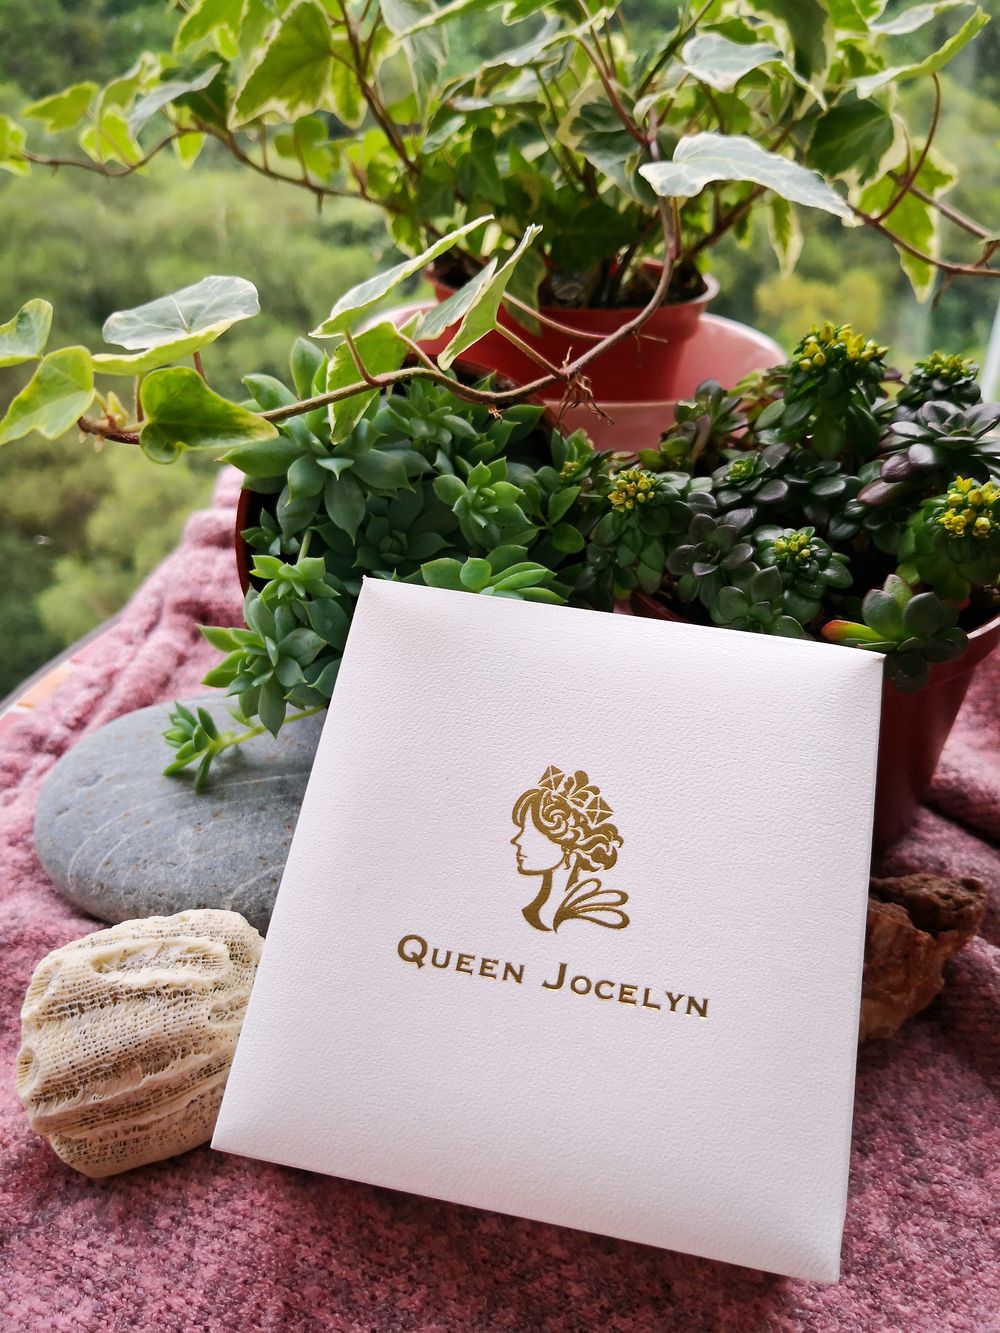 【Queen Jocelyn】女孩的第一件輕珠寶×外出旅遊不可忘的質感~橙雨露玫瑰金晶鑽項鍊簡約時尚 吃貨旅遊作家水靜葳 (10)